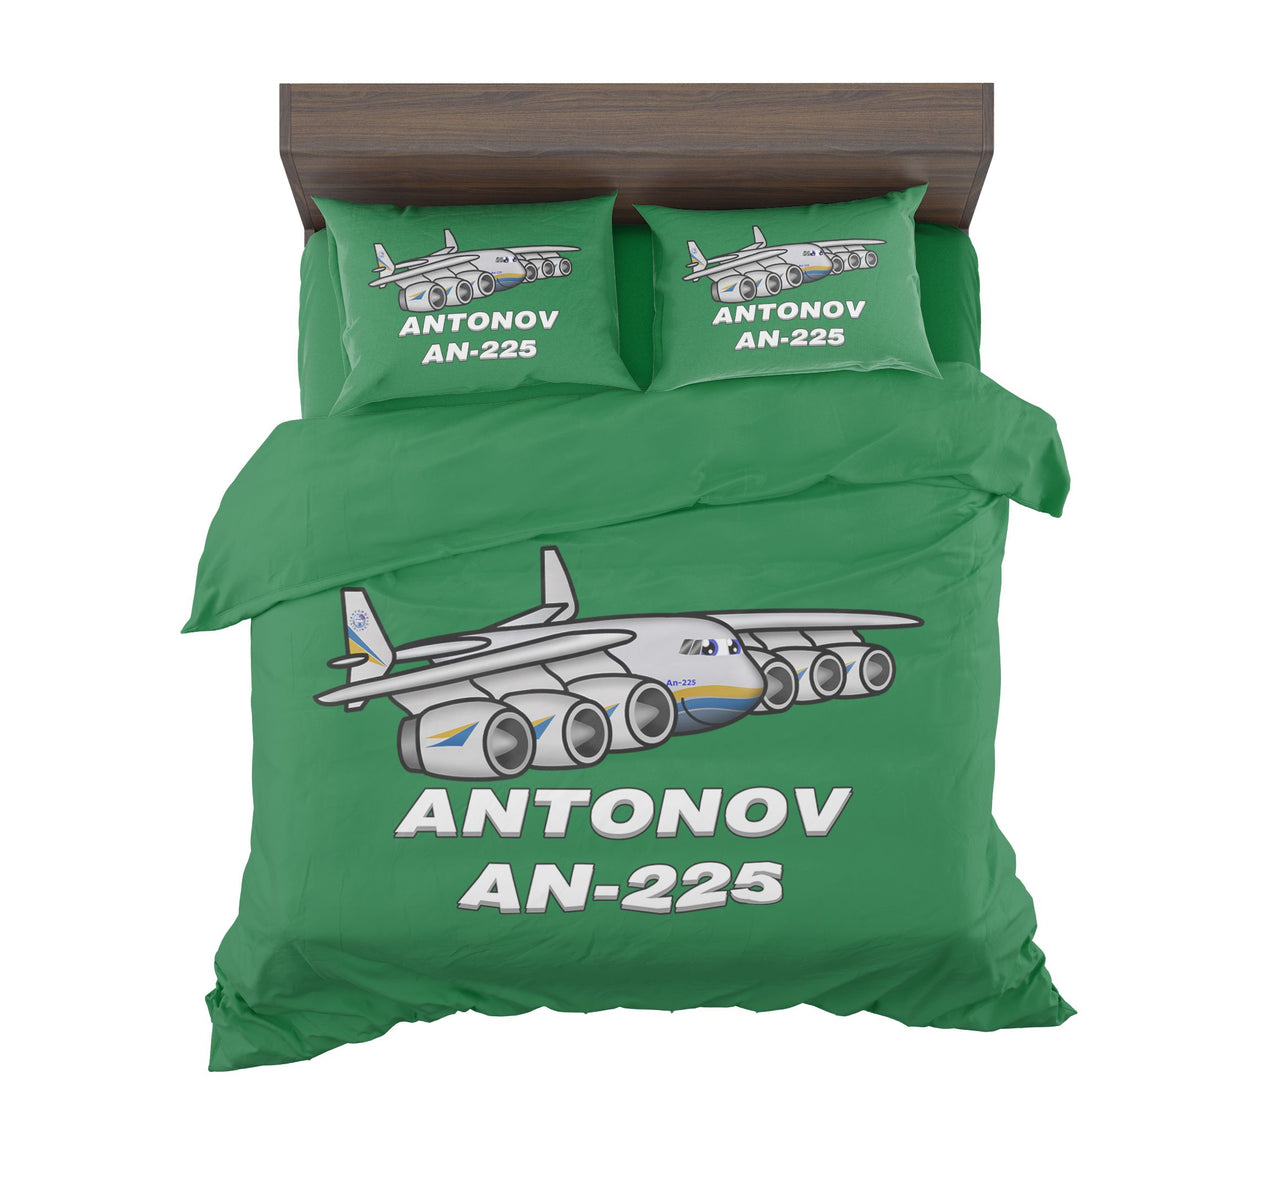 Antonov AN-225 (25) Designed Bedding Sets